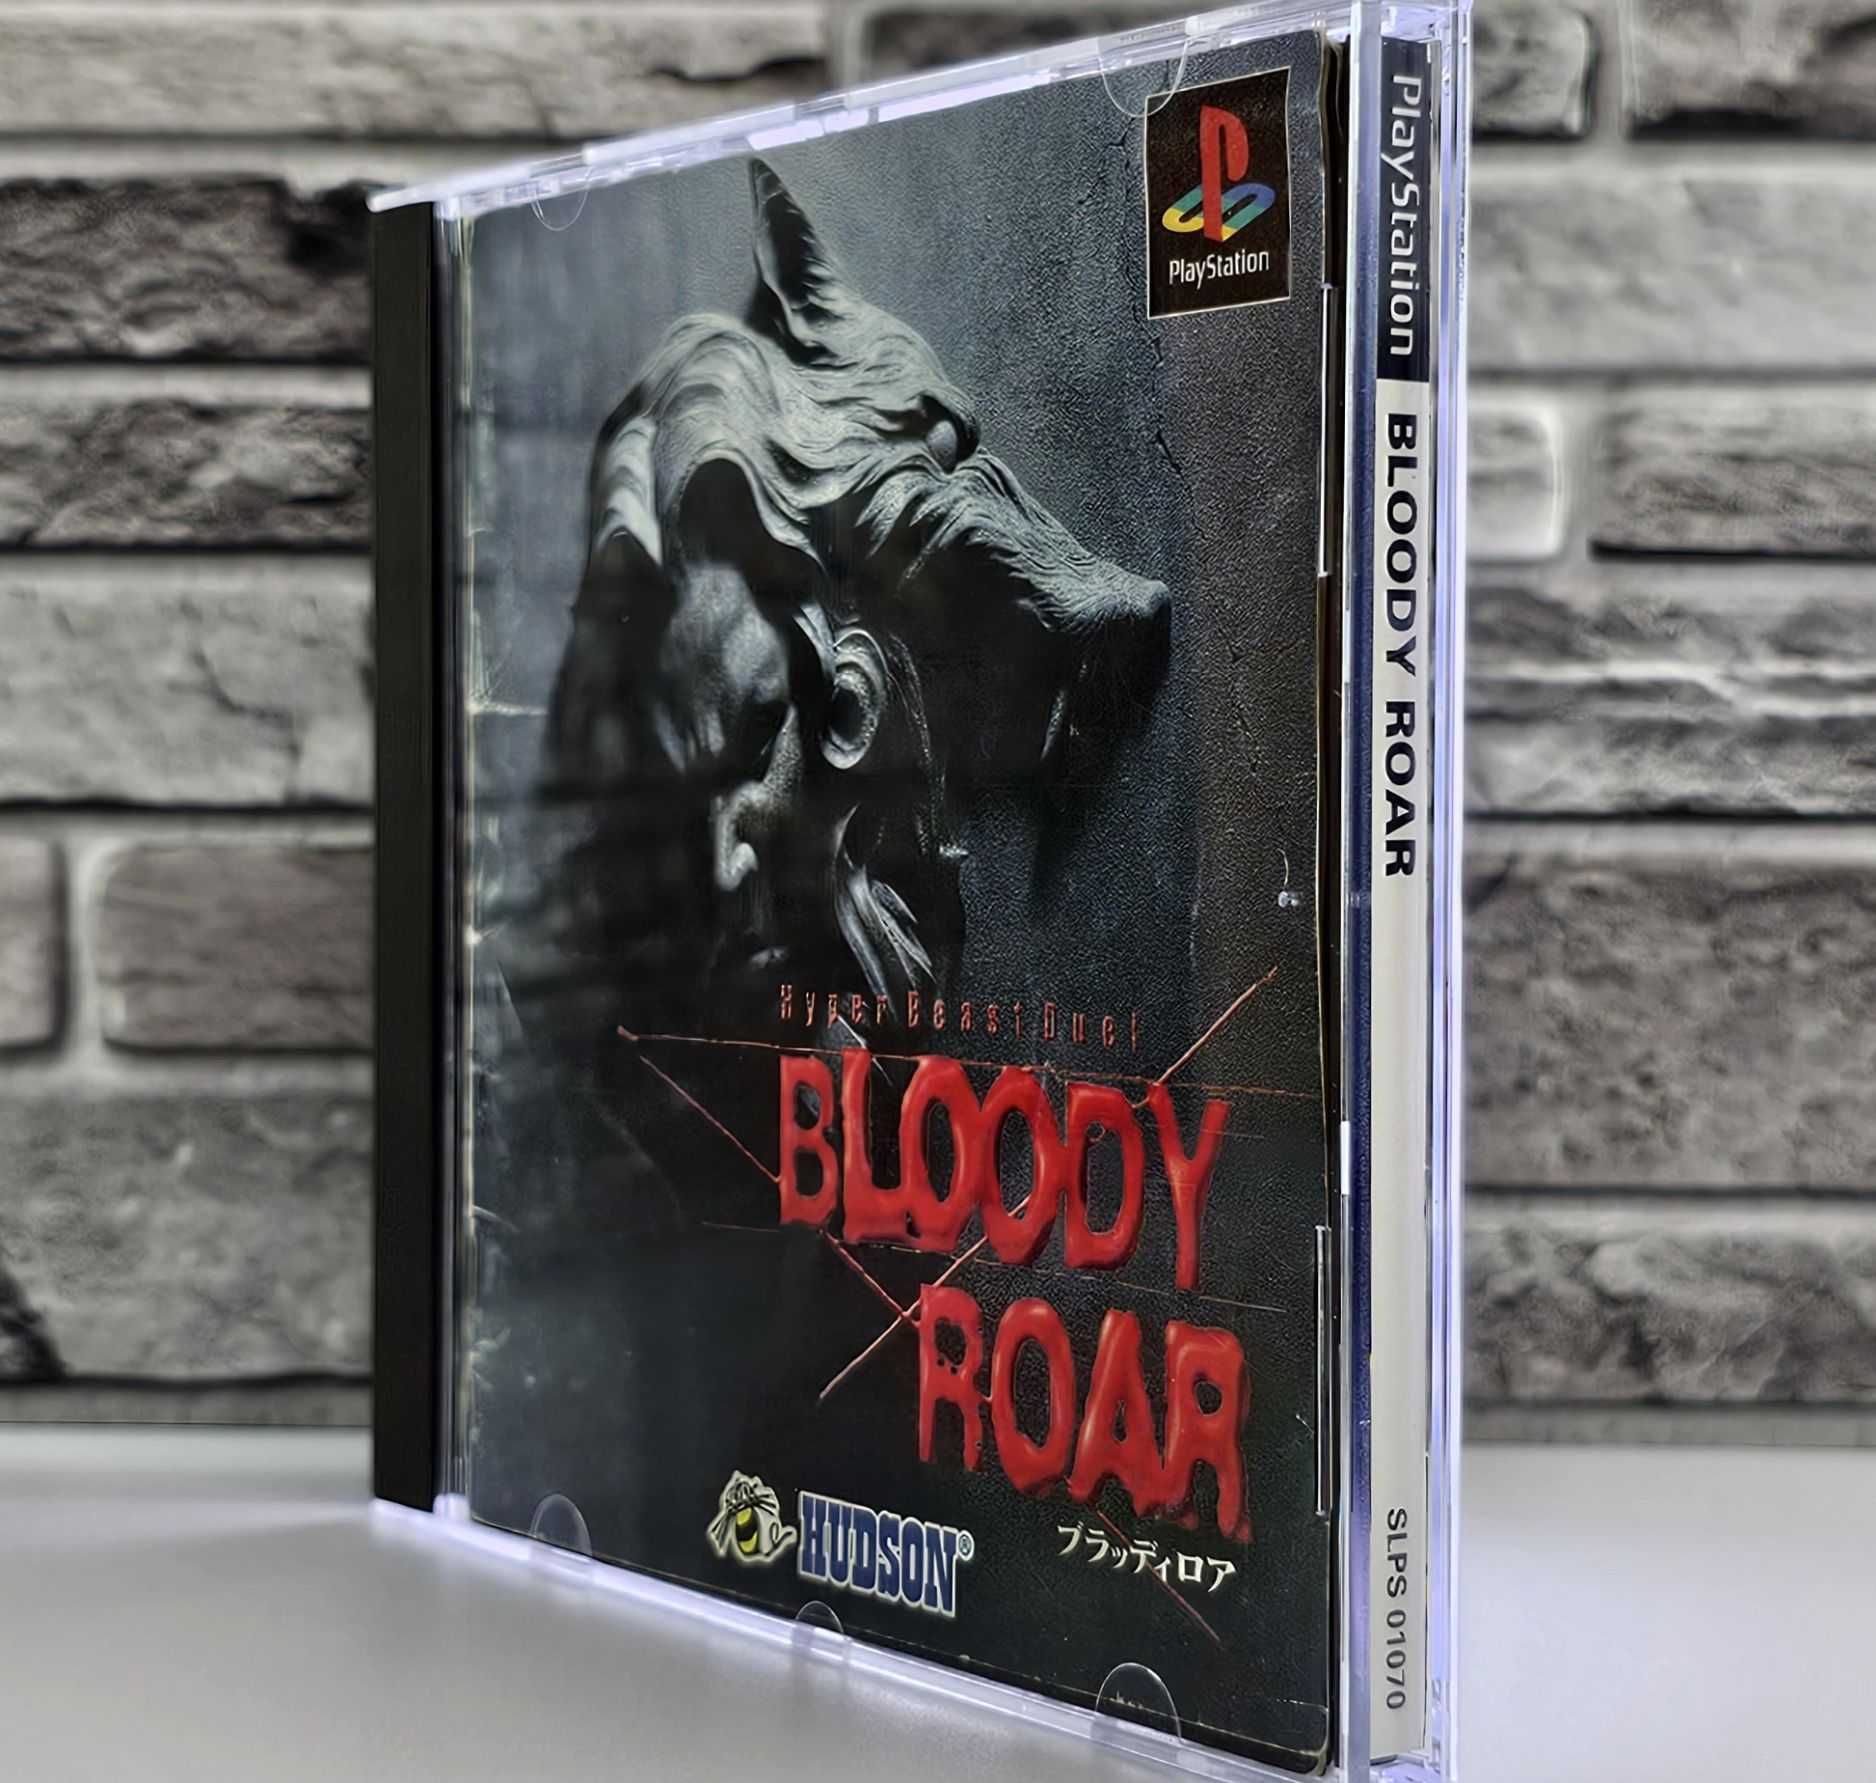 Playstation Bloody Roar